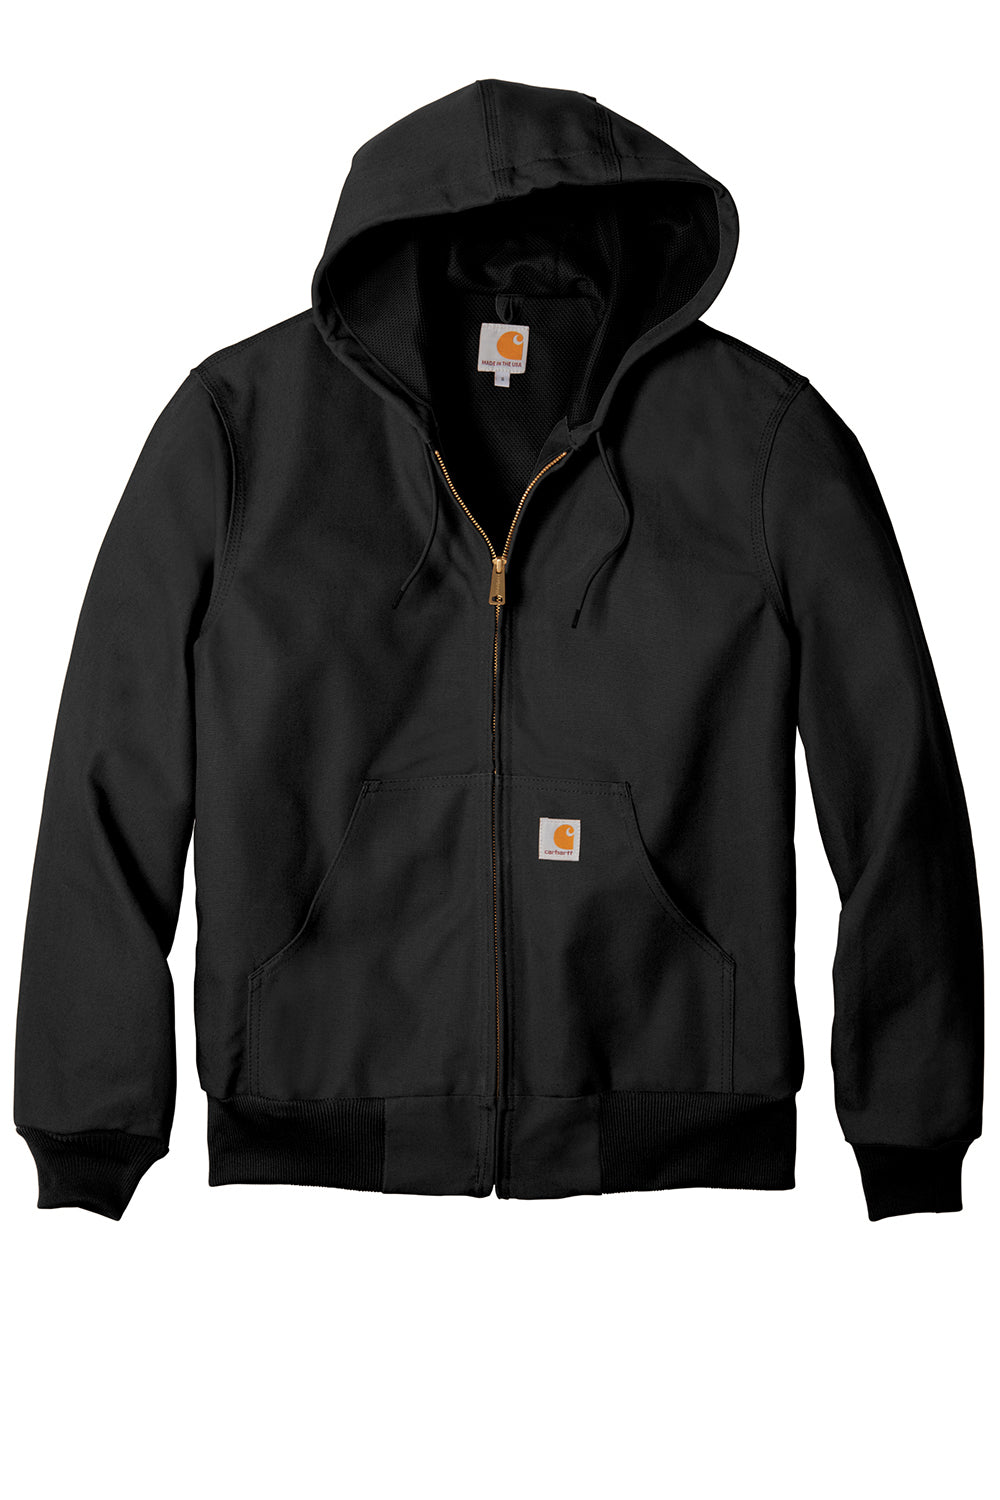 Carhartt CTJ131/CTTJ131 Mens Wind & Water Resistant Duck Cloth Full Zip Hooded Work Jacket Black Flat Front